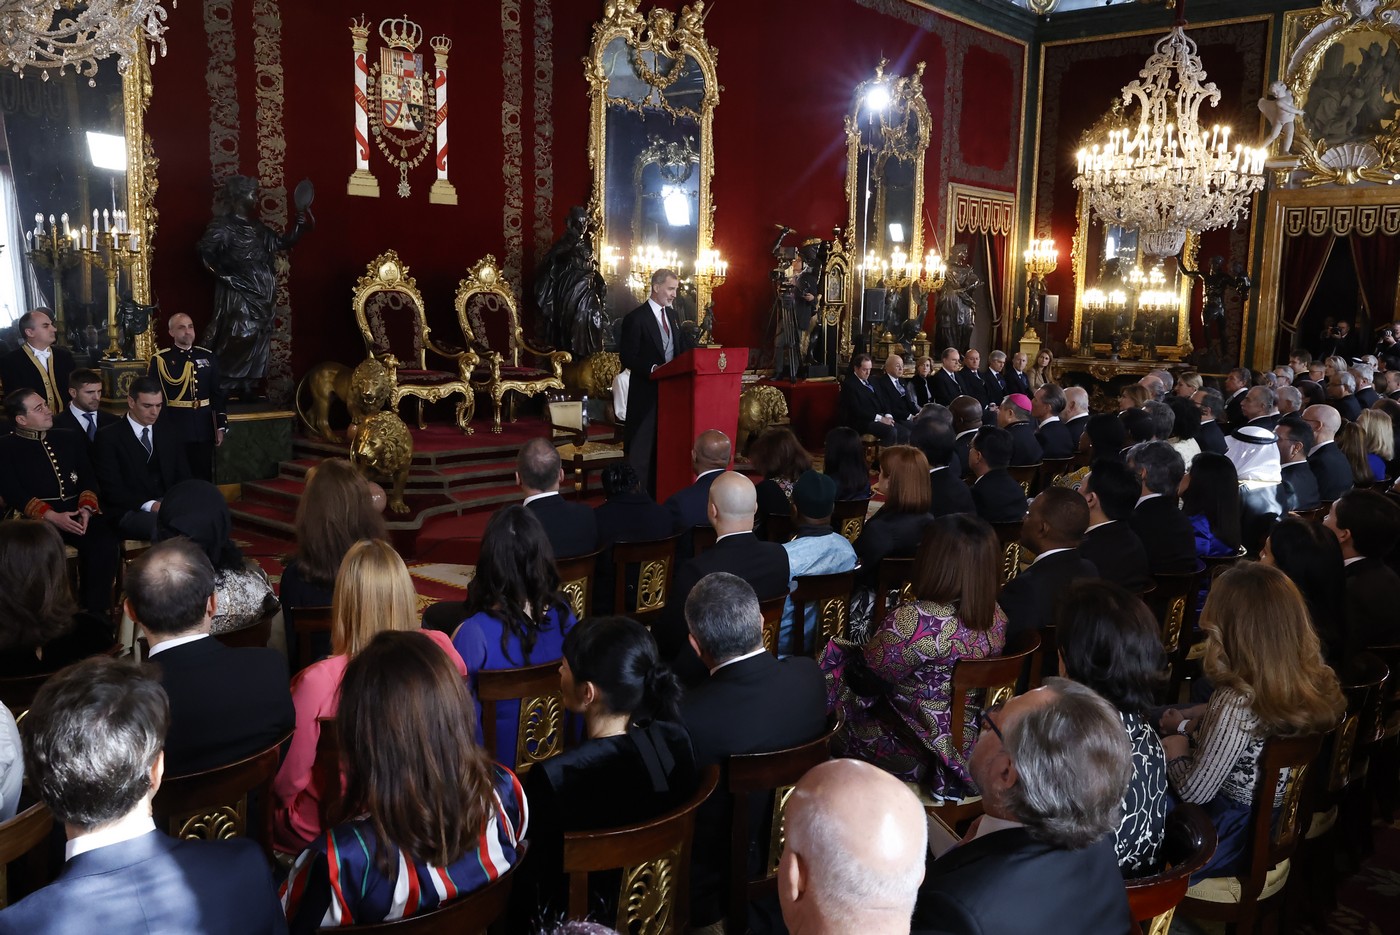 Reception hosted by King Felipe VI